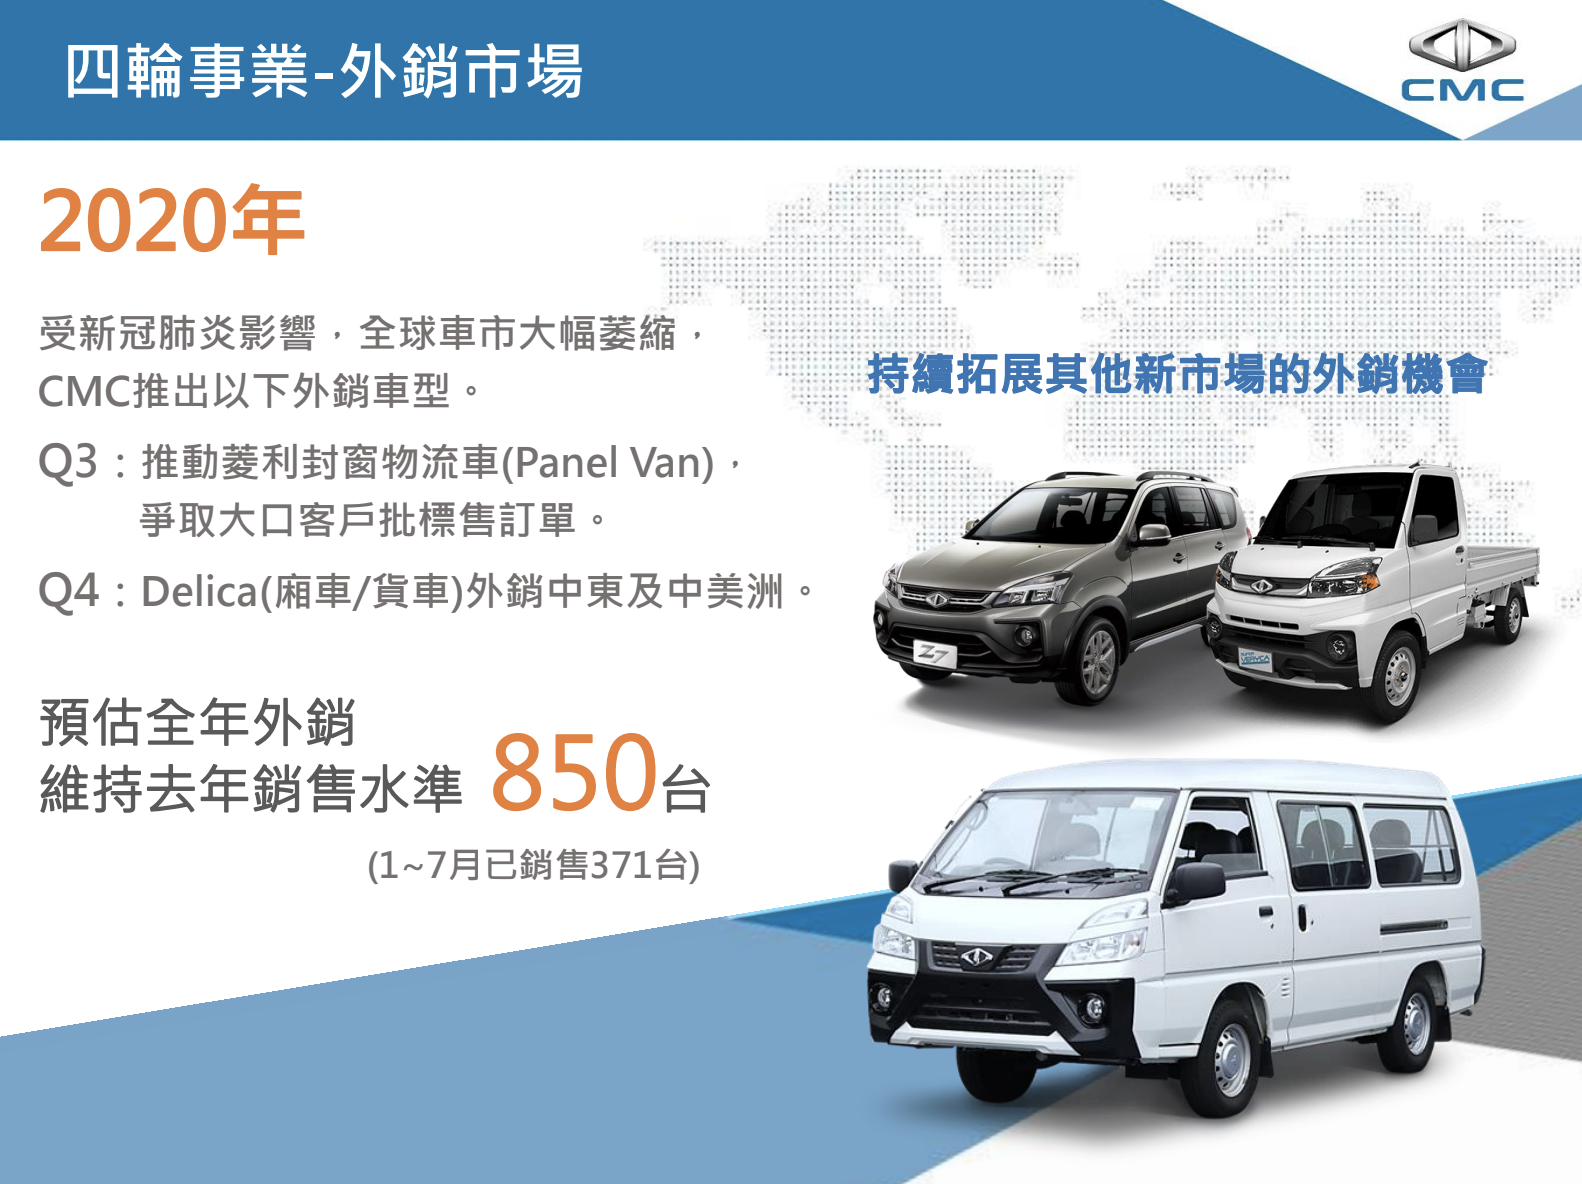 Fw: [新聞] Toyota 台灣國產車品質究竟如何？日本原廠用數據說話